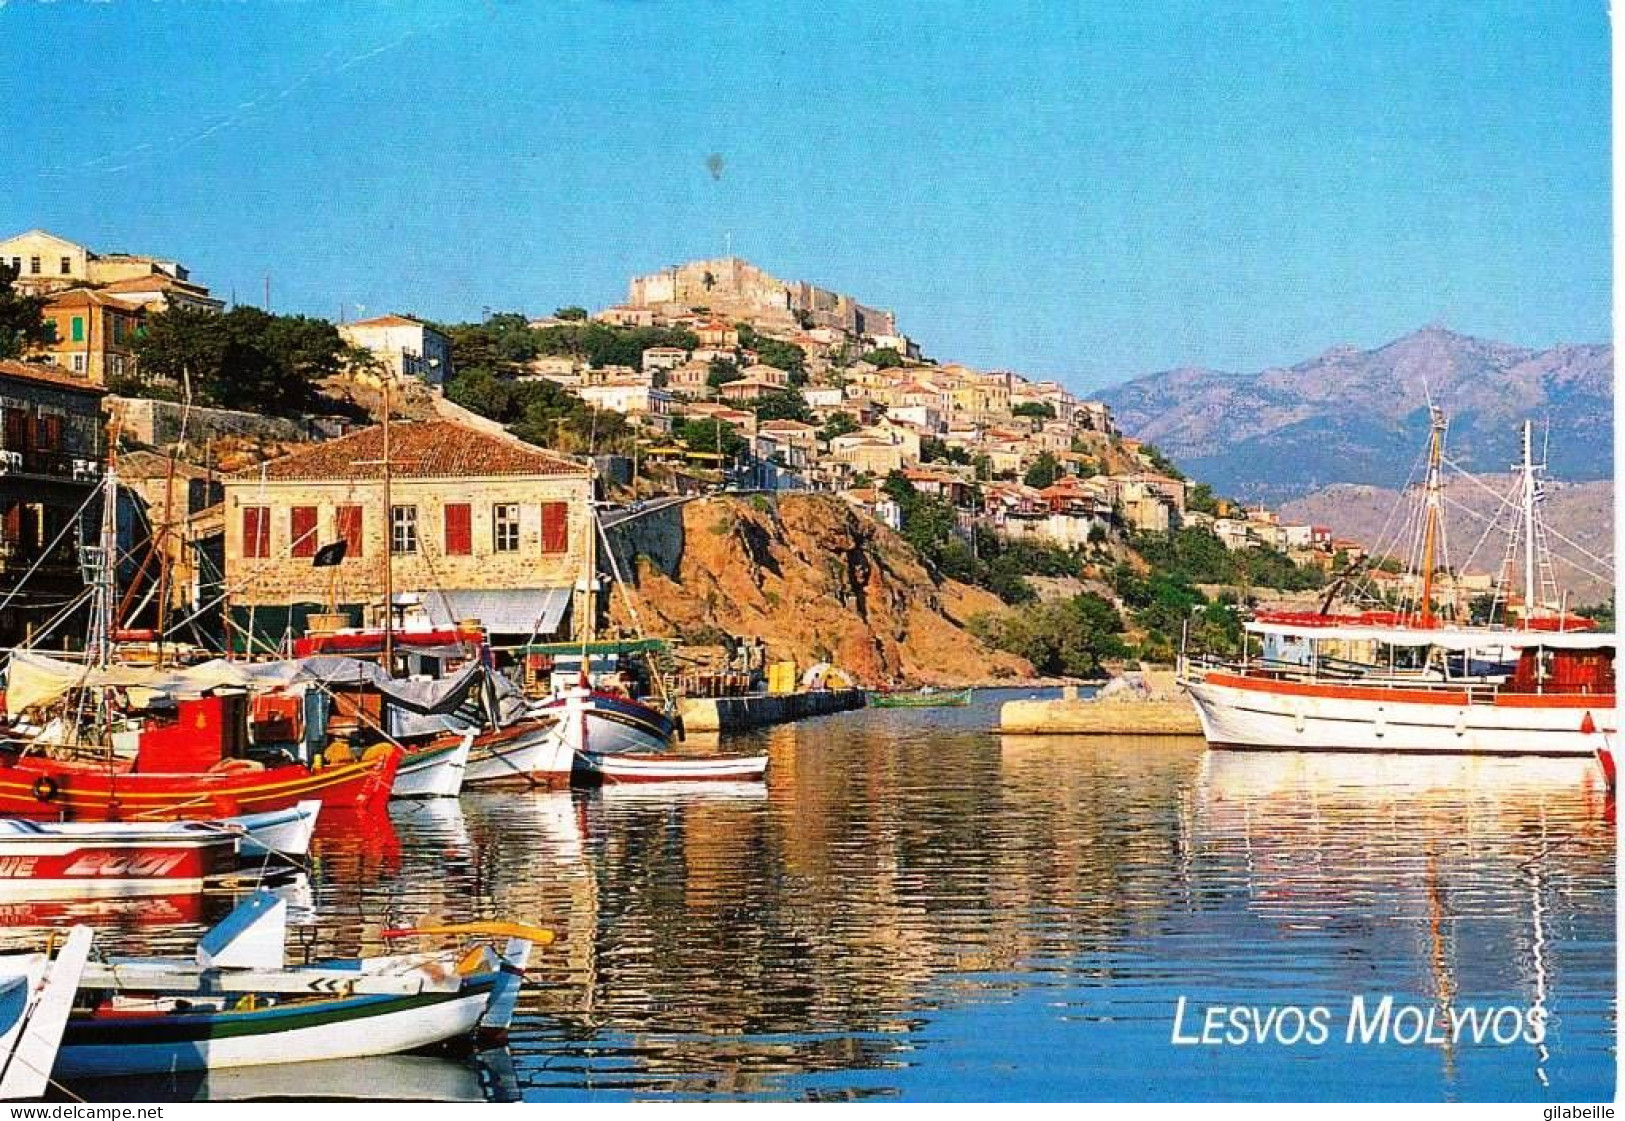 Grece - Ελλάδα - ΛΕΣΒΟΣ ΜΟΛΥΒΟΣ - το λιμάνι -  LESVOS MOLYVOS - Le Port - Grèce